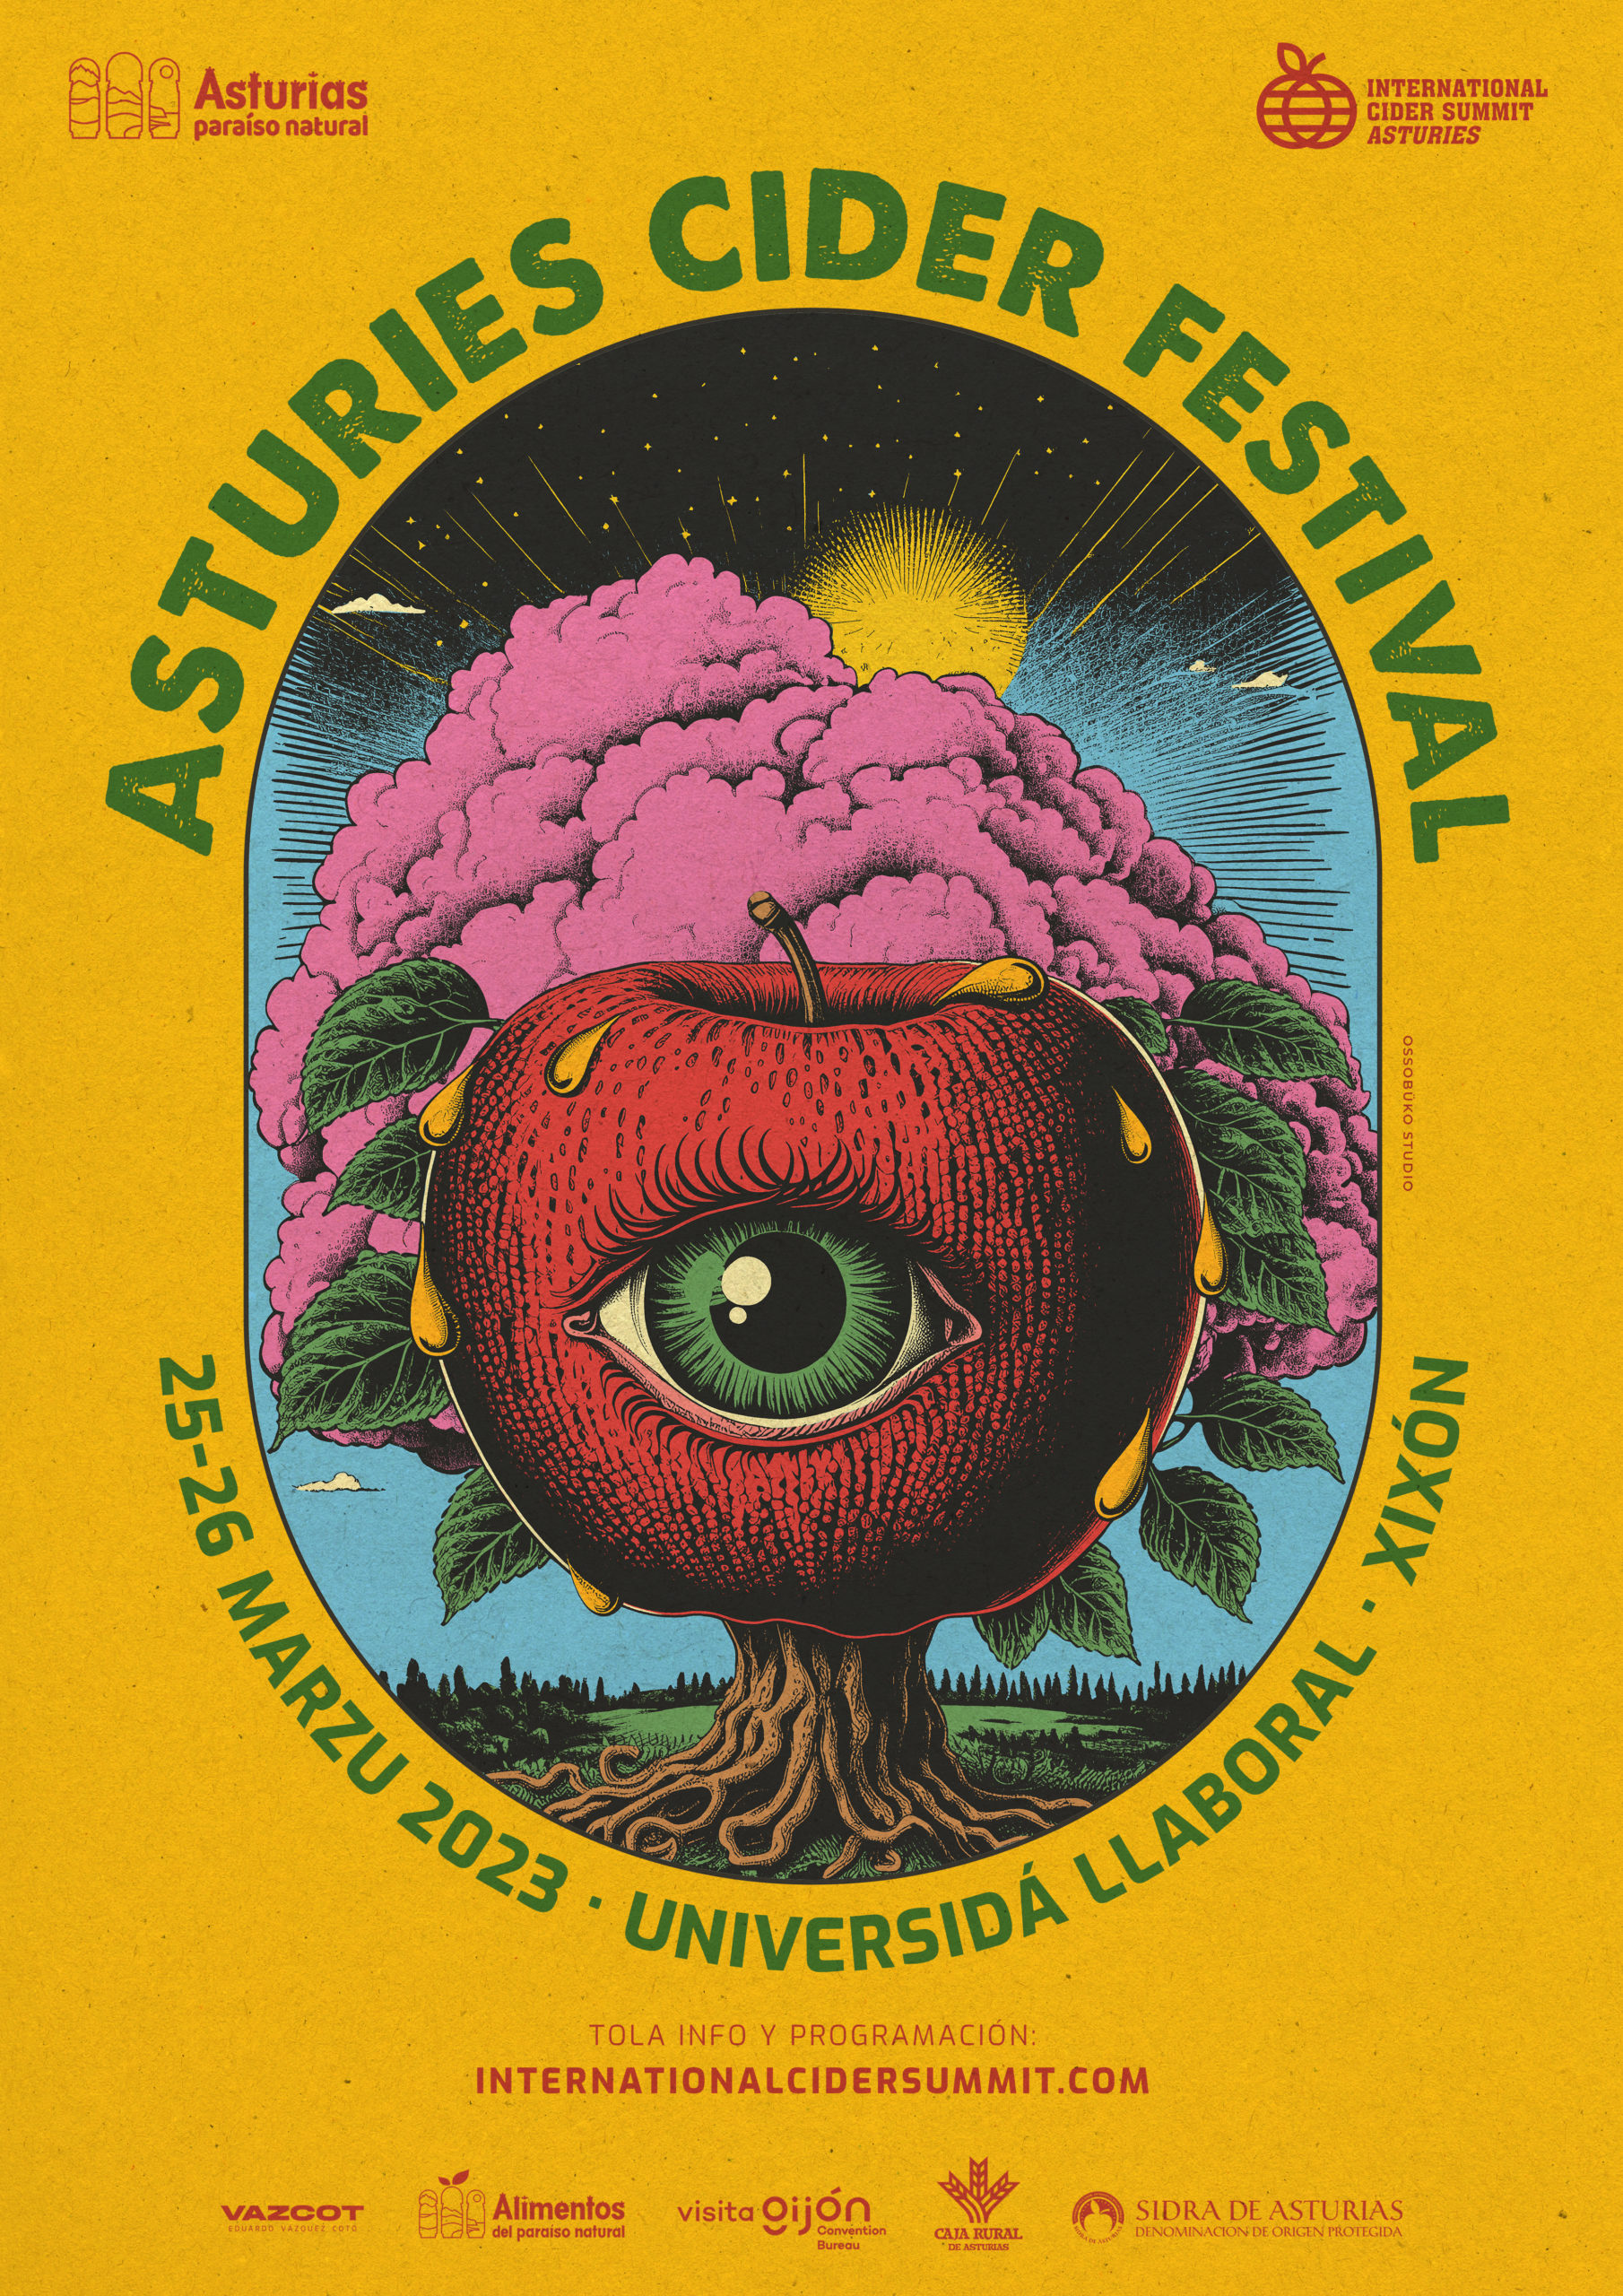 Cartel del Asturies cider festival